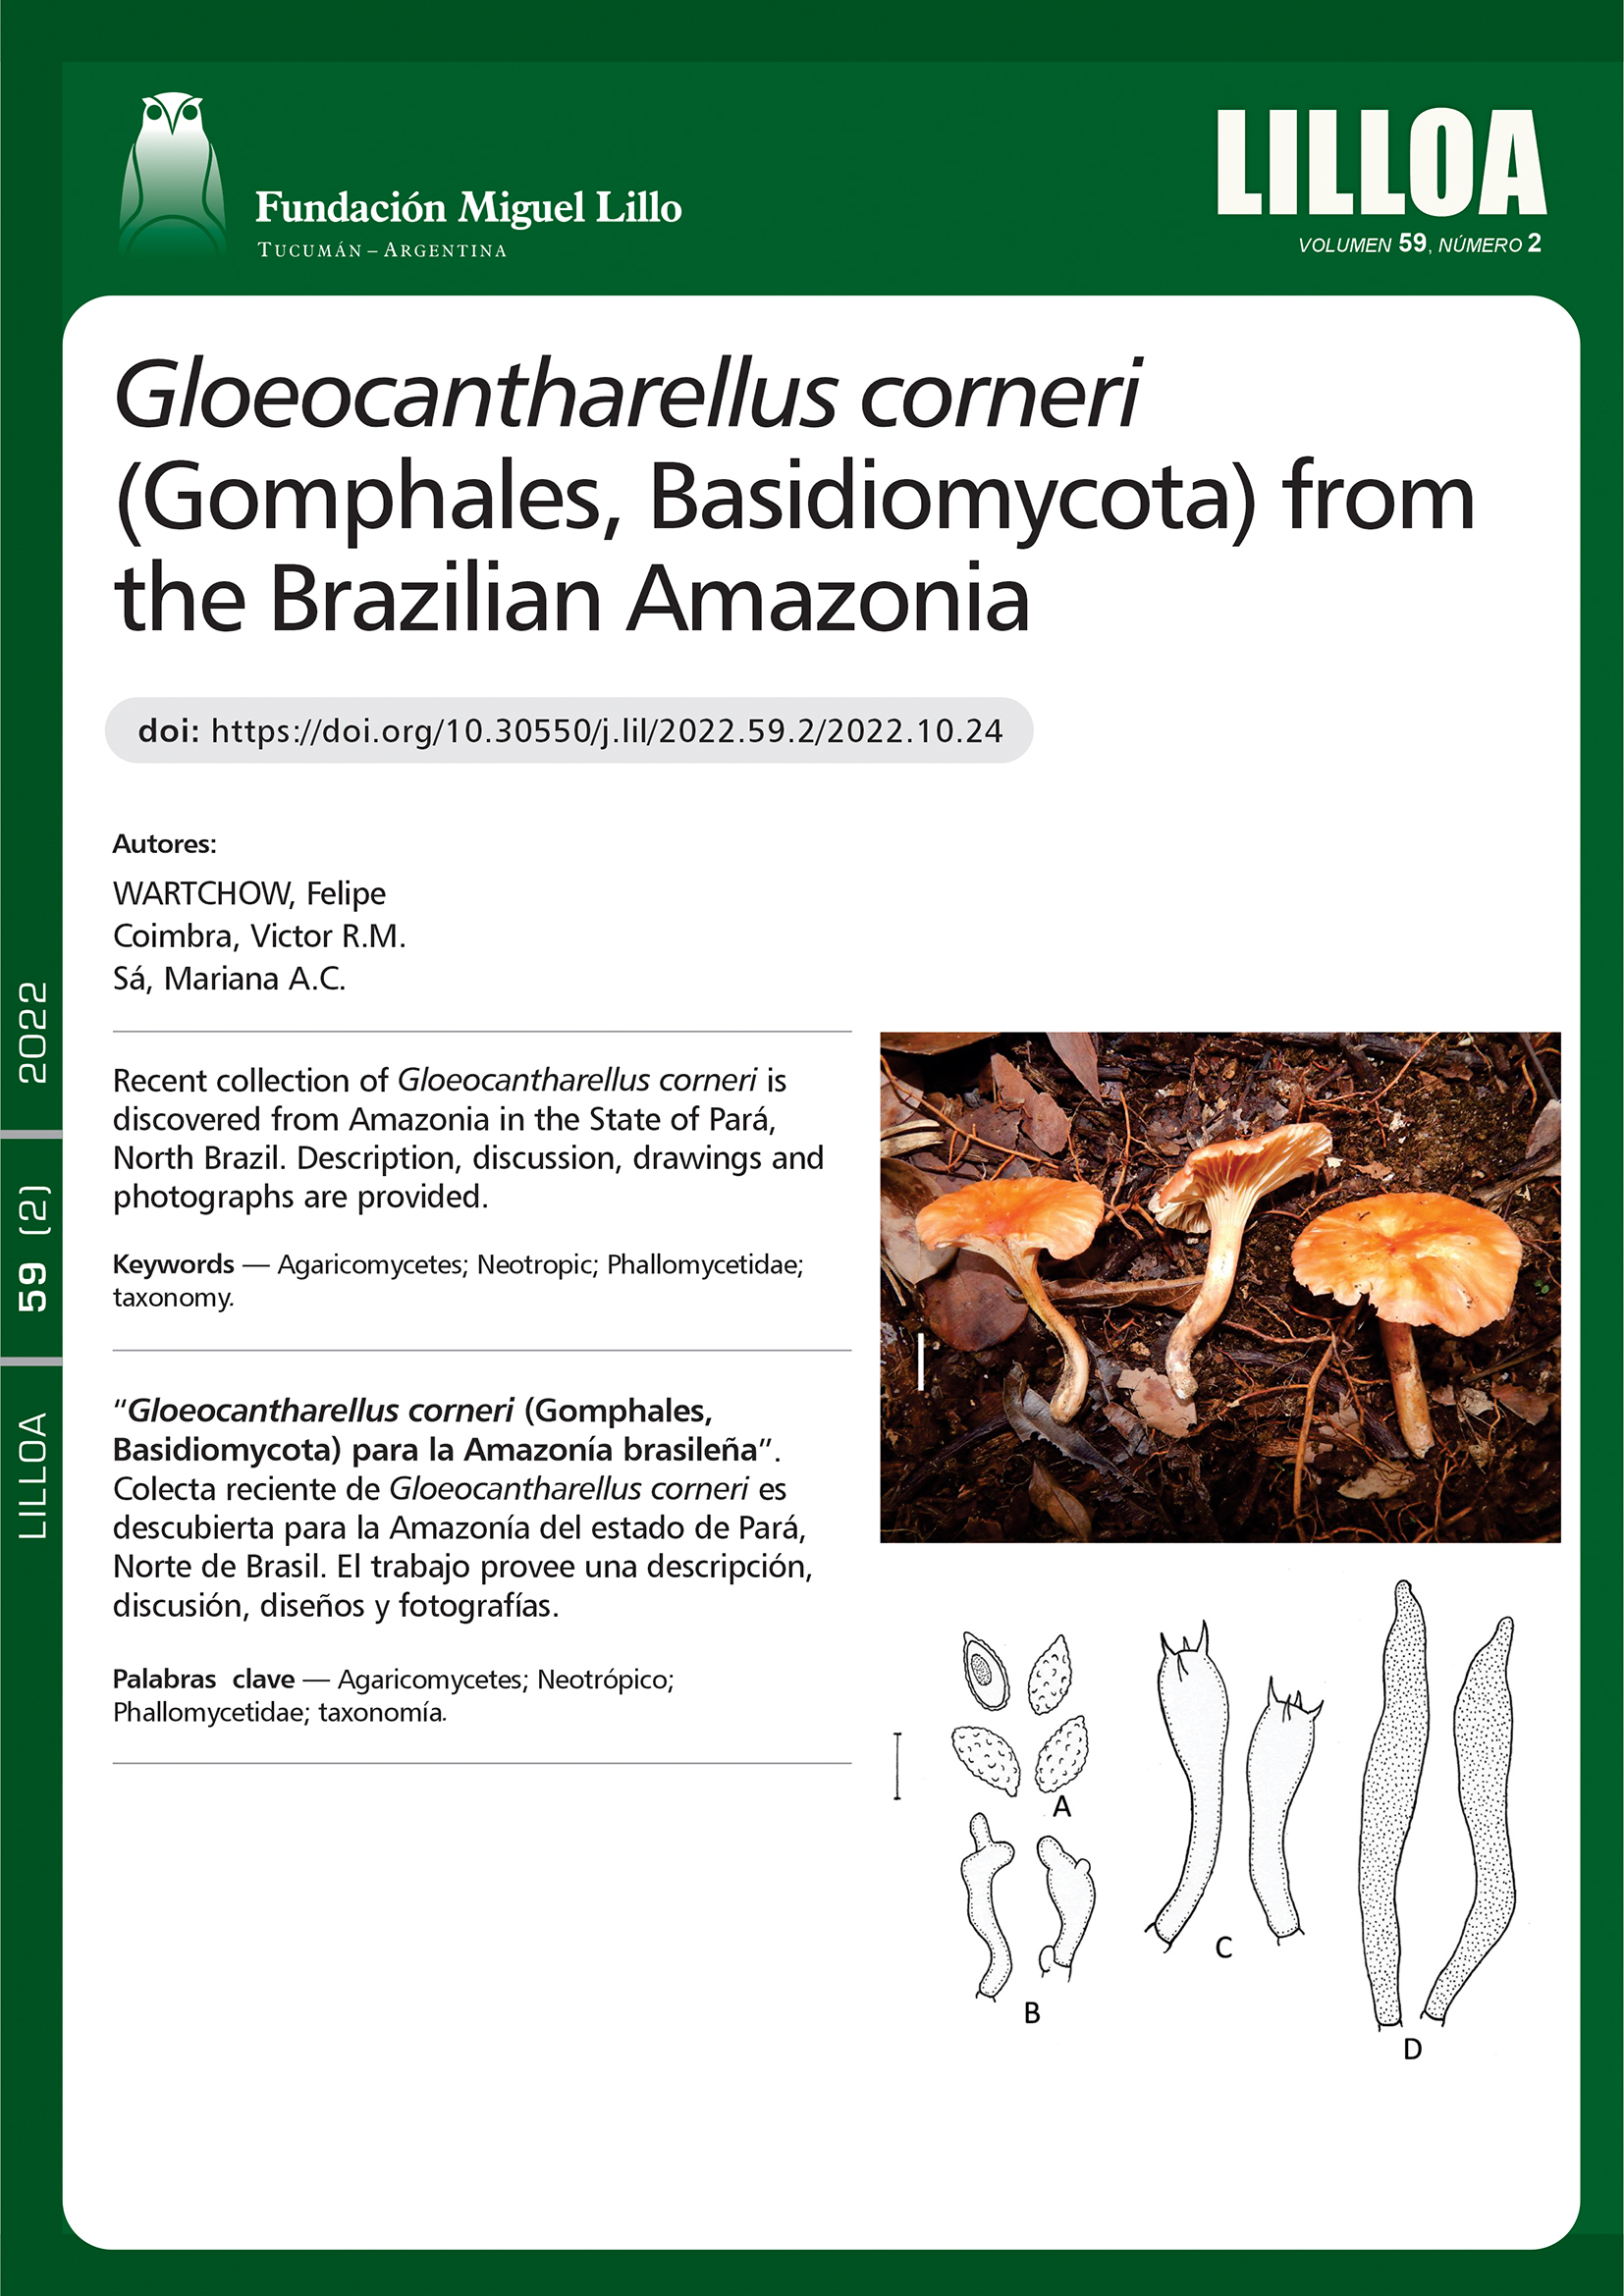 Gloeocantharellus corneri (Gomphales, Basidiomycota) para la Amazonía brasileña